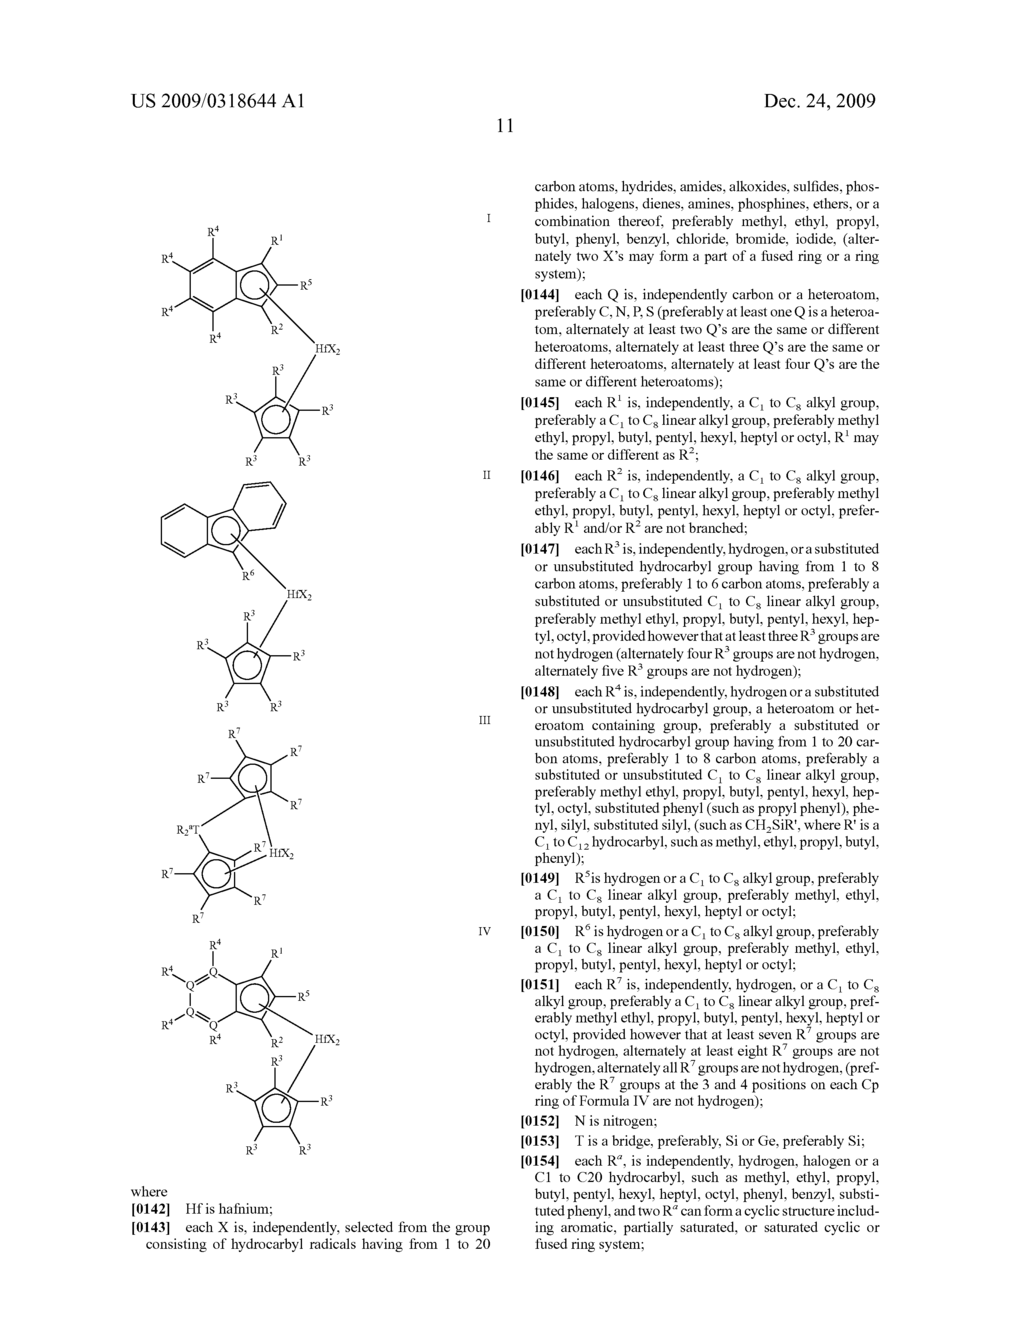 High Vinyl Terminated Propylene Based Oligomers - diagram, schematic, and image 14